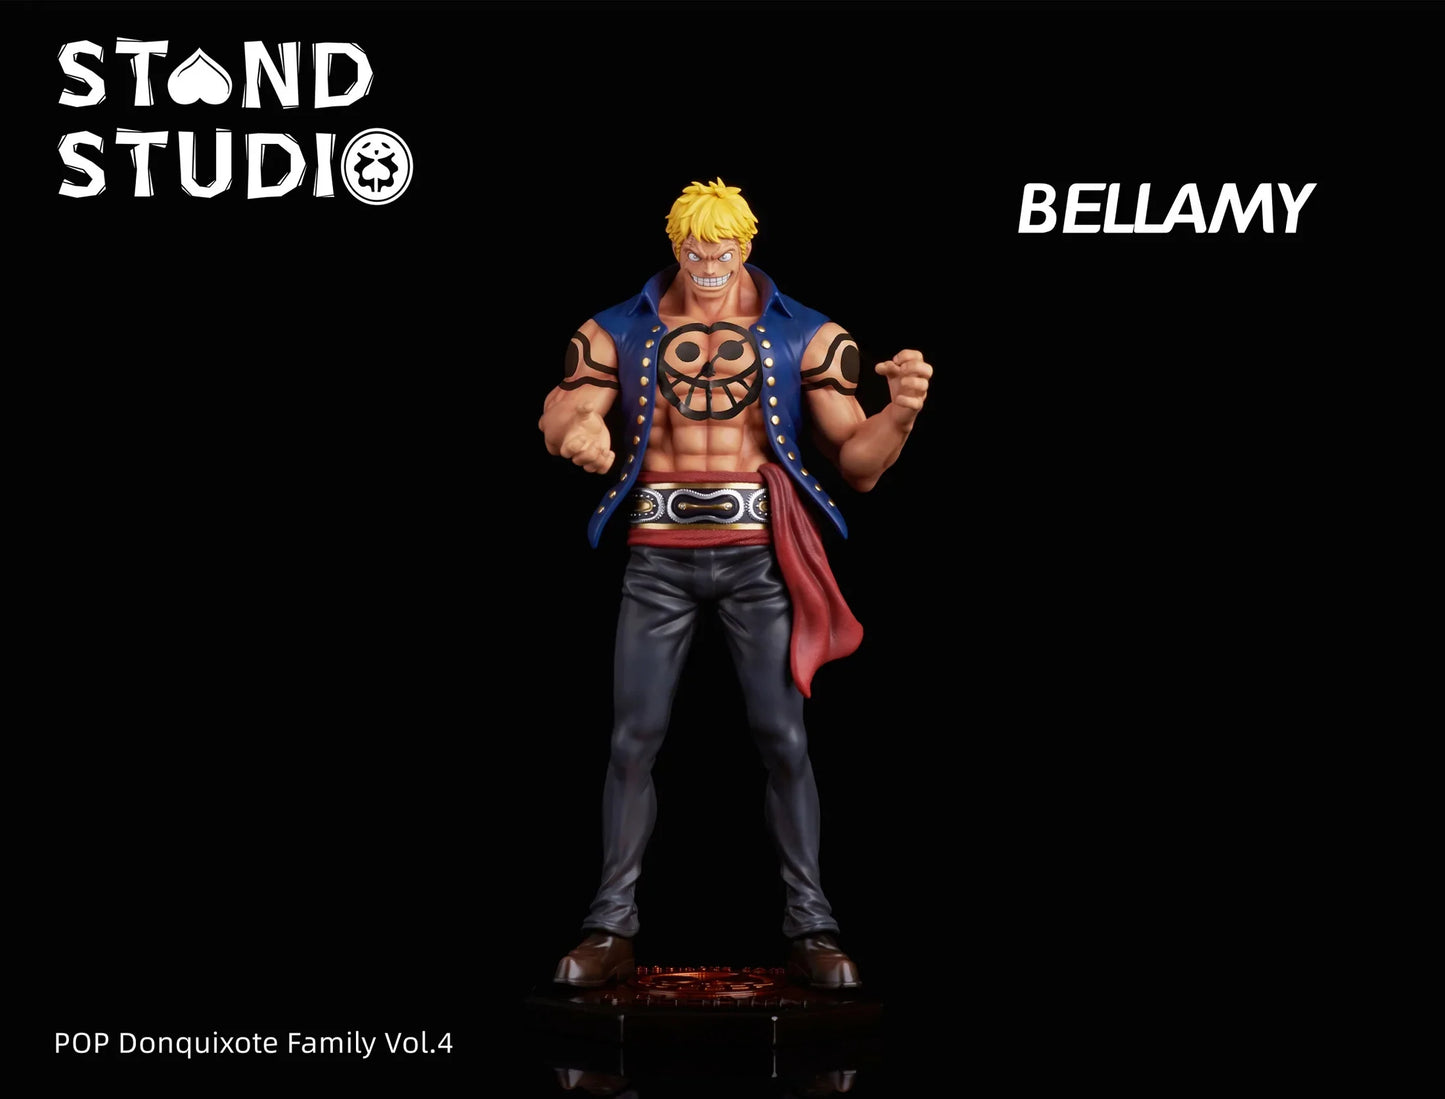 Stand - Bellamy StatueCorp